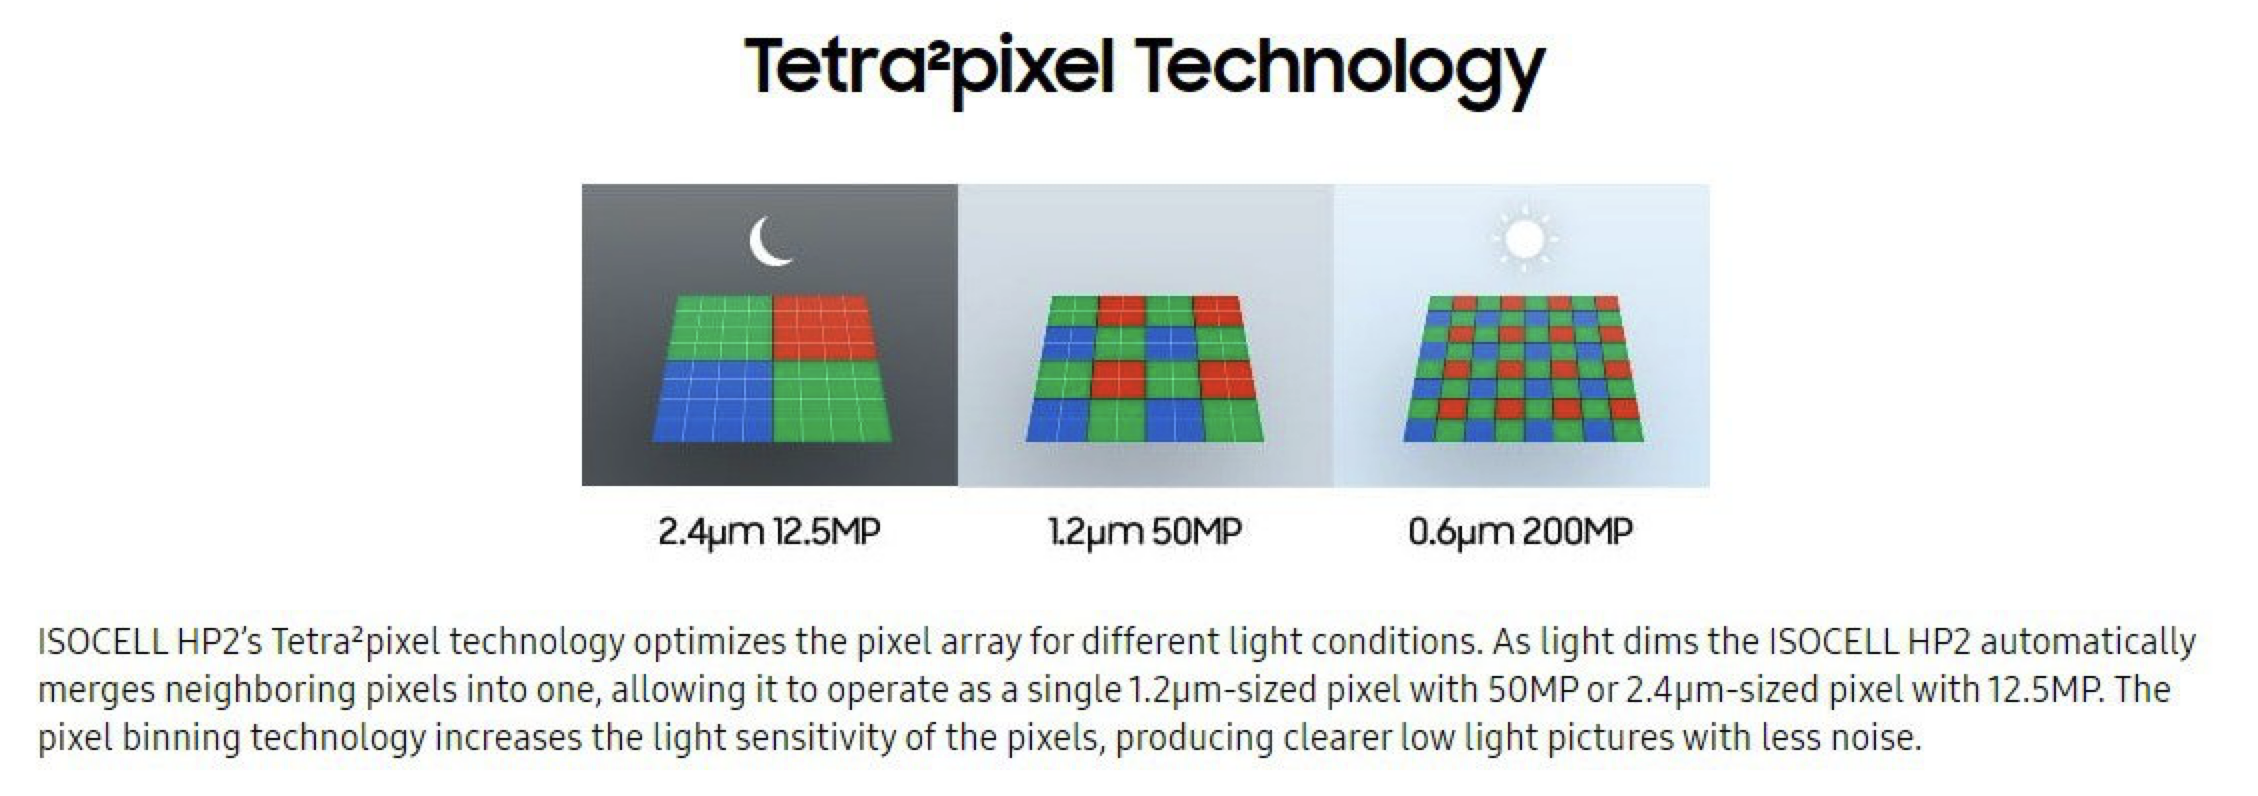 Samsung Tetra Pixel